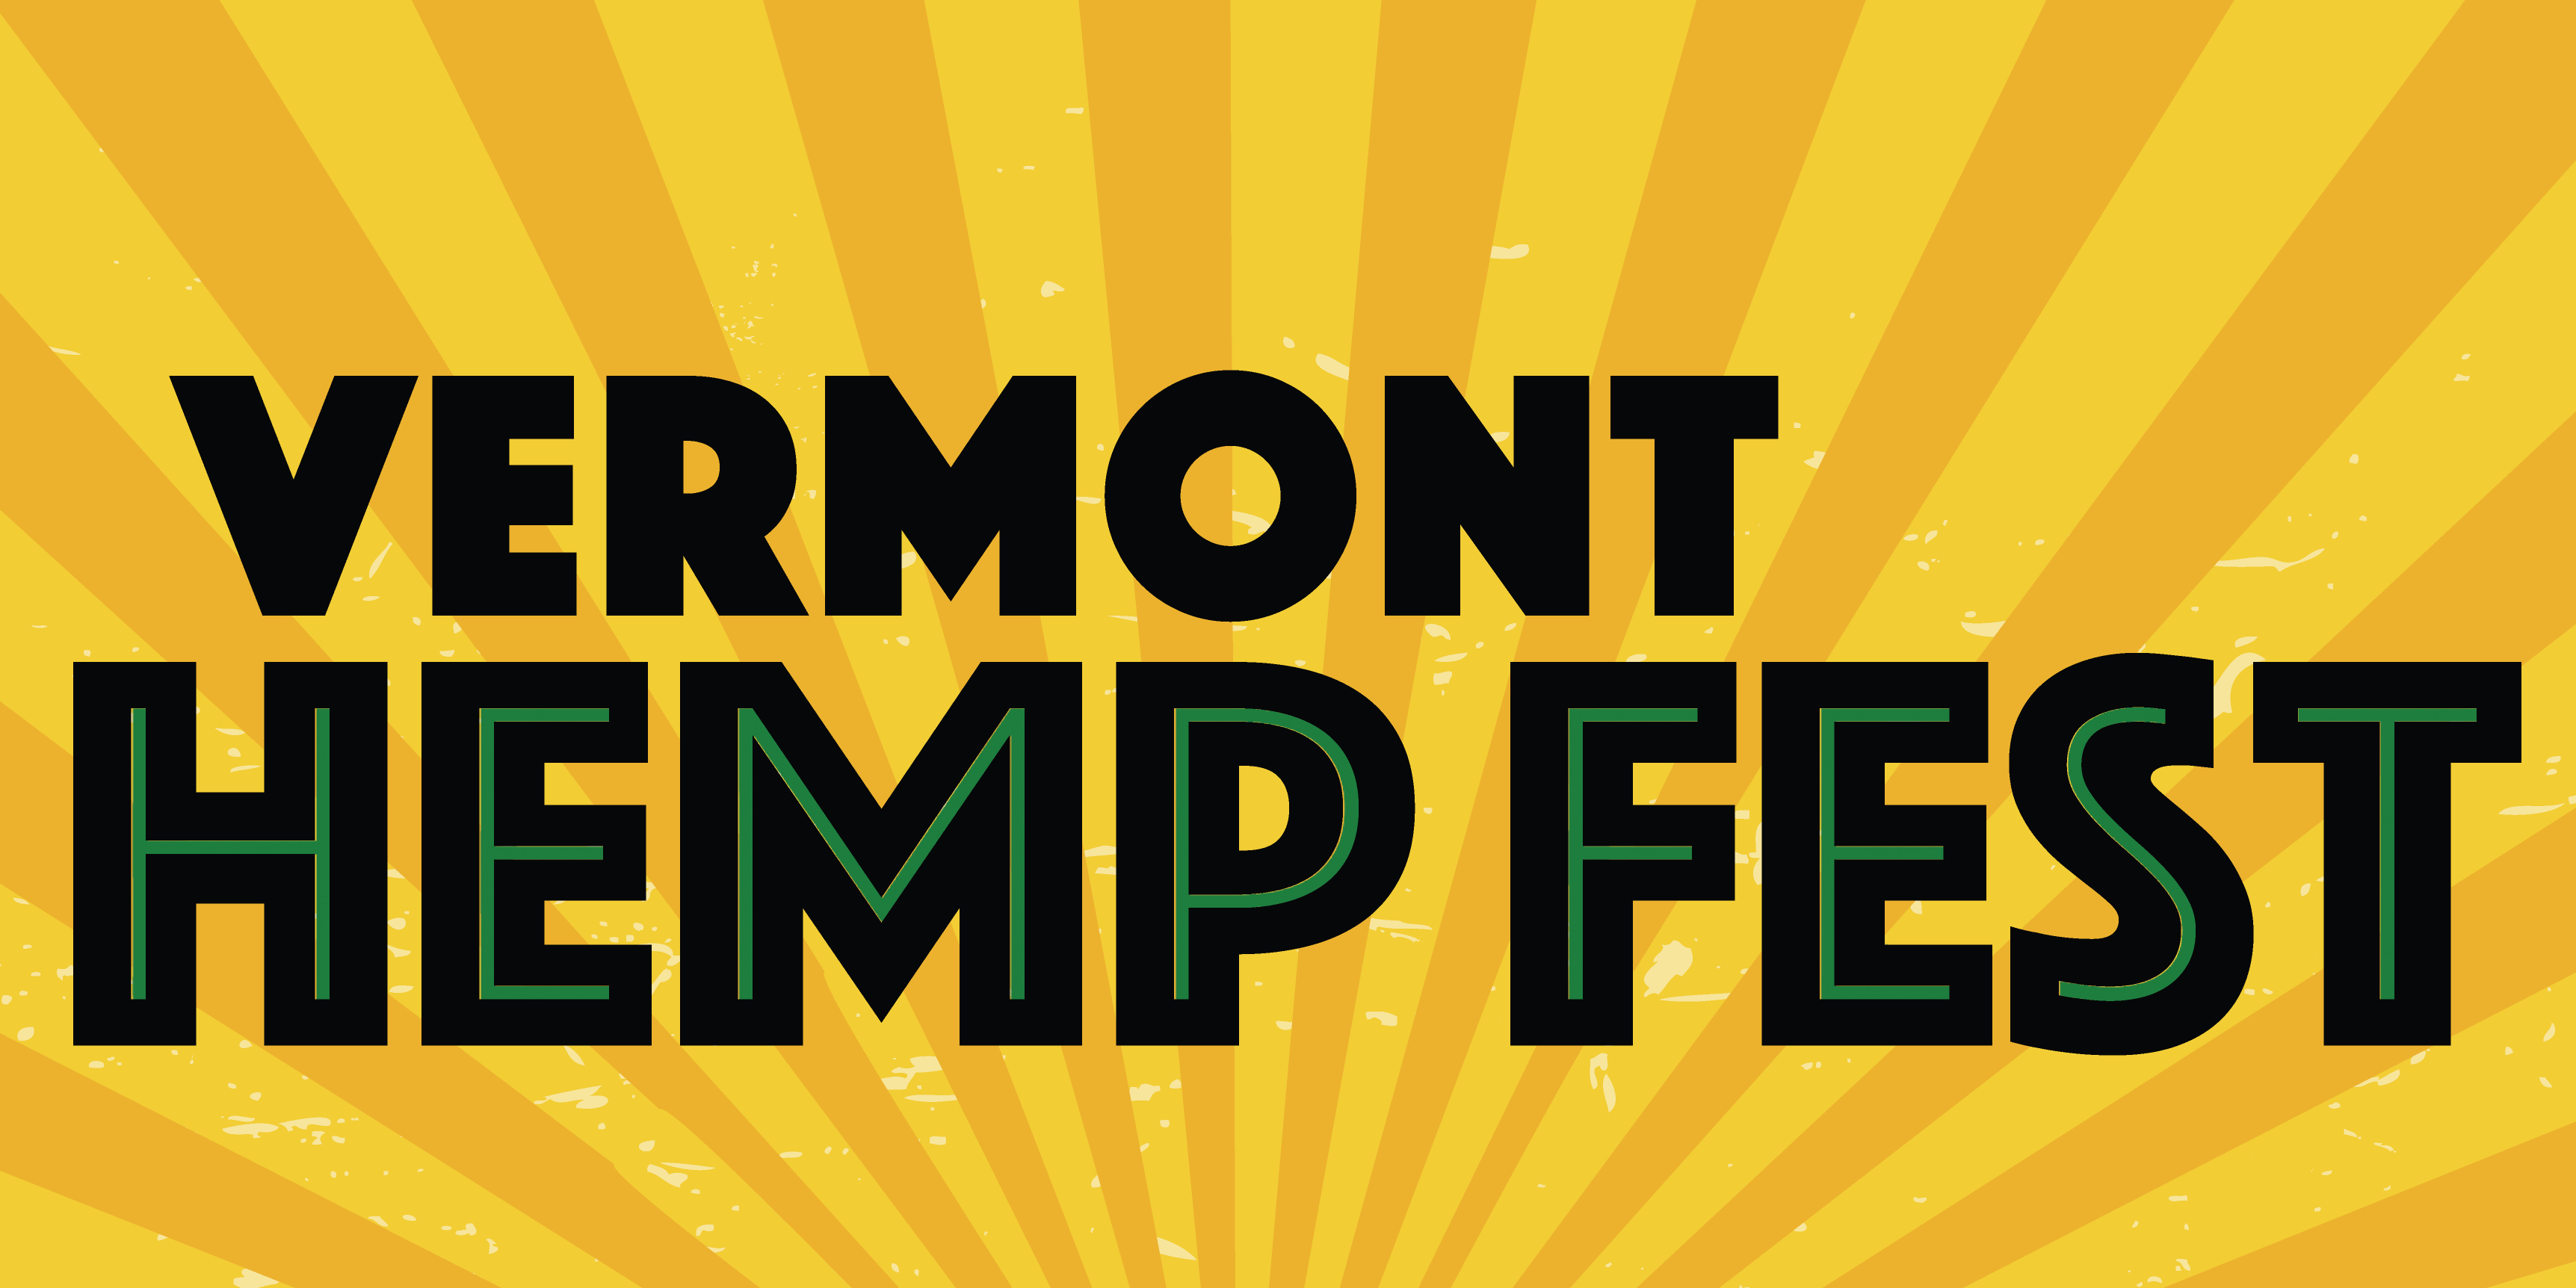 Virtual Vermont Hemp Fest event logo